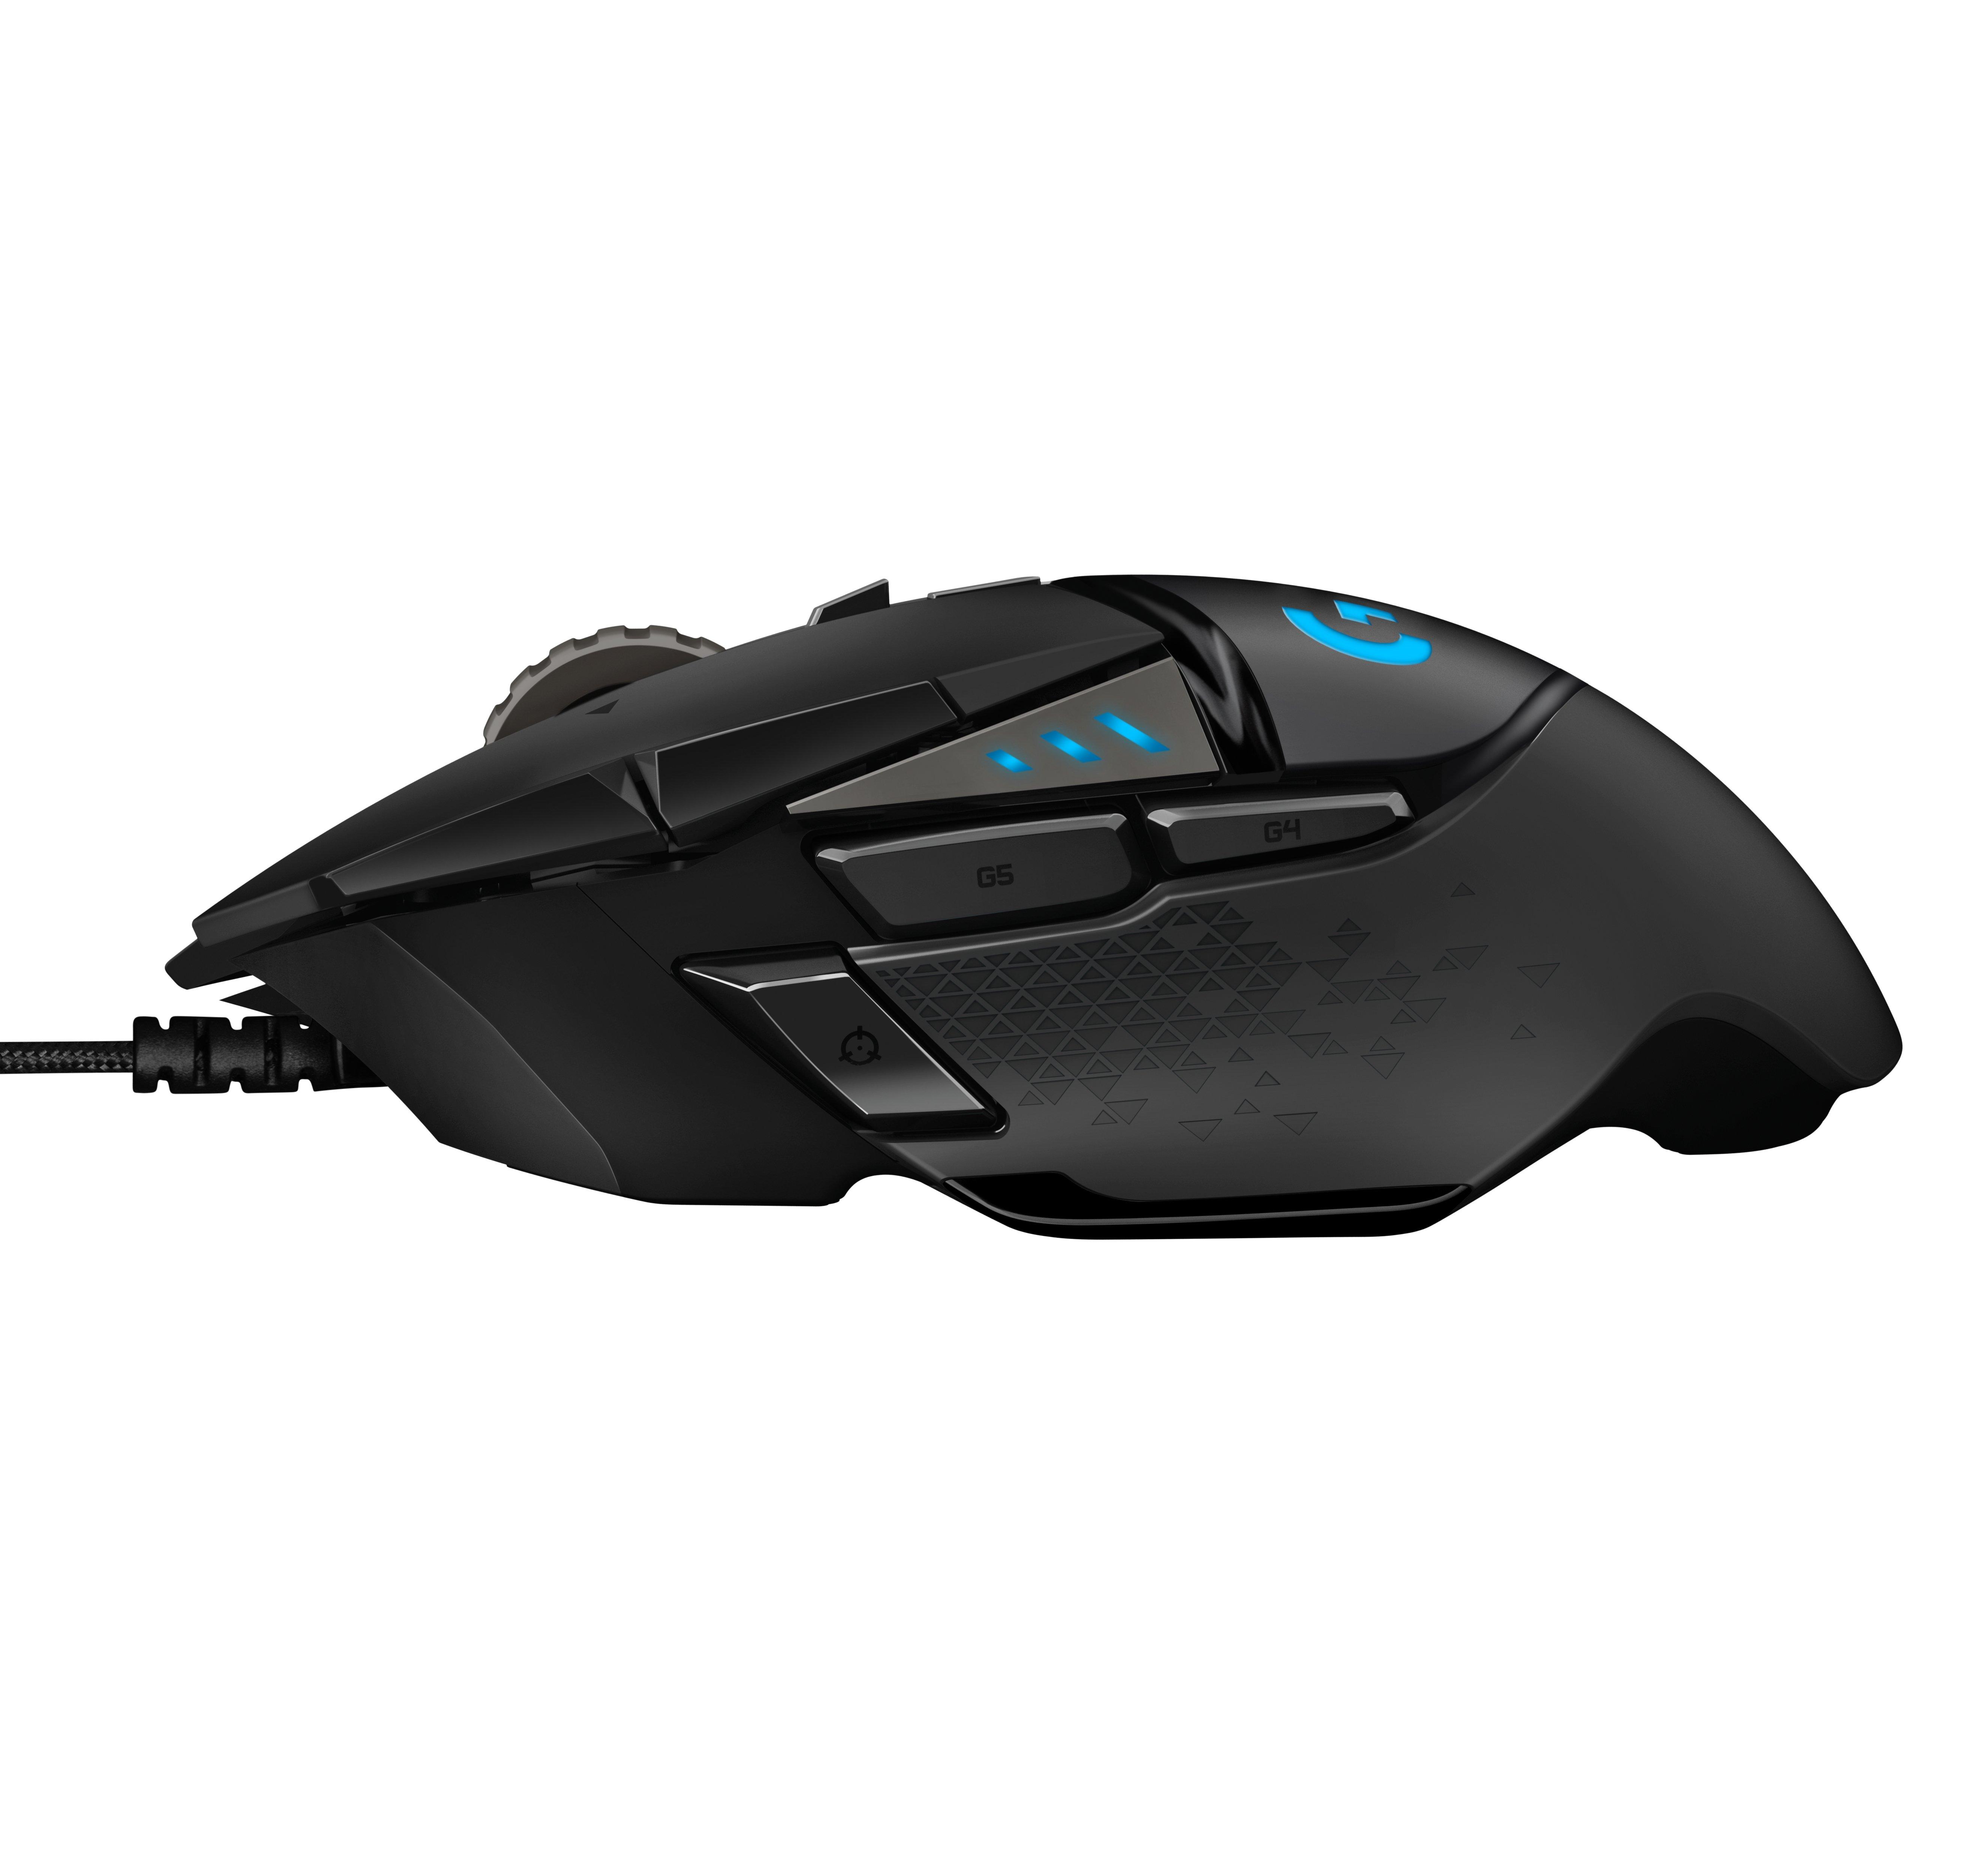 https://media.gamestop.com/i/gamestop/10175195_SCR02/Logitech-G502-HERO-Wired-Gaming-Mouse?$screen$